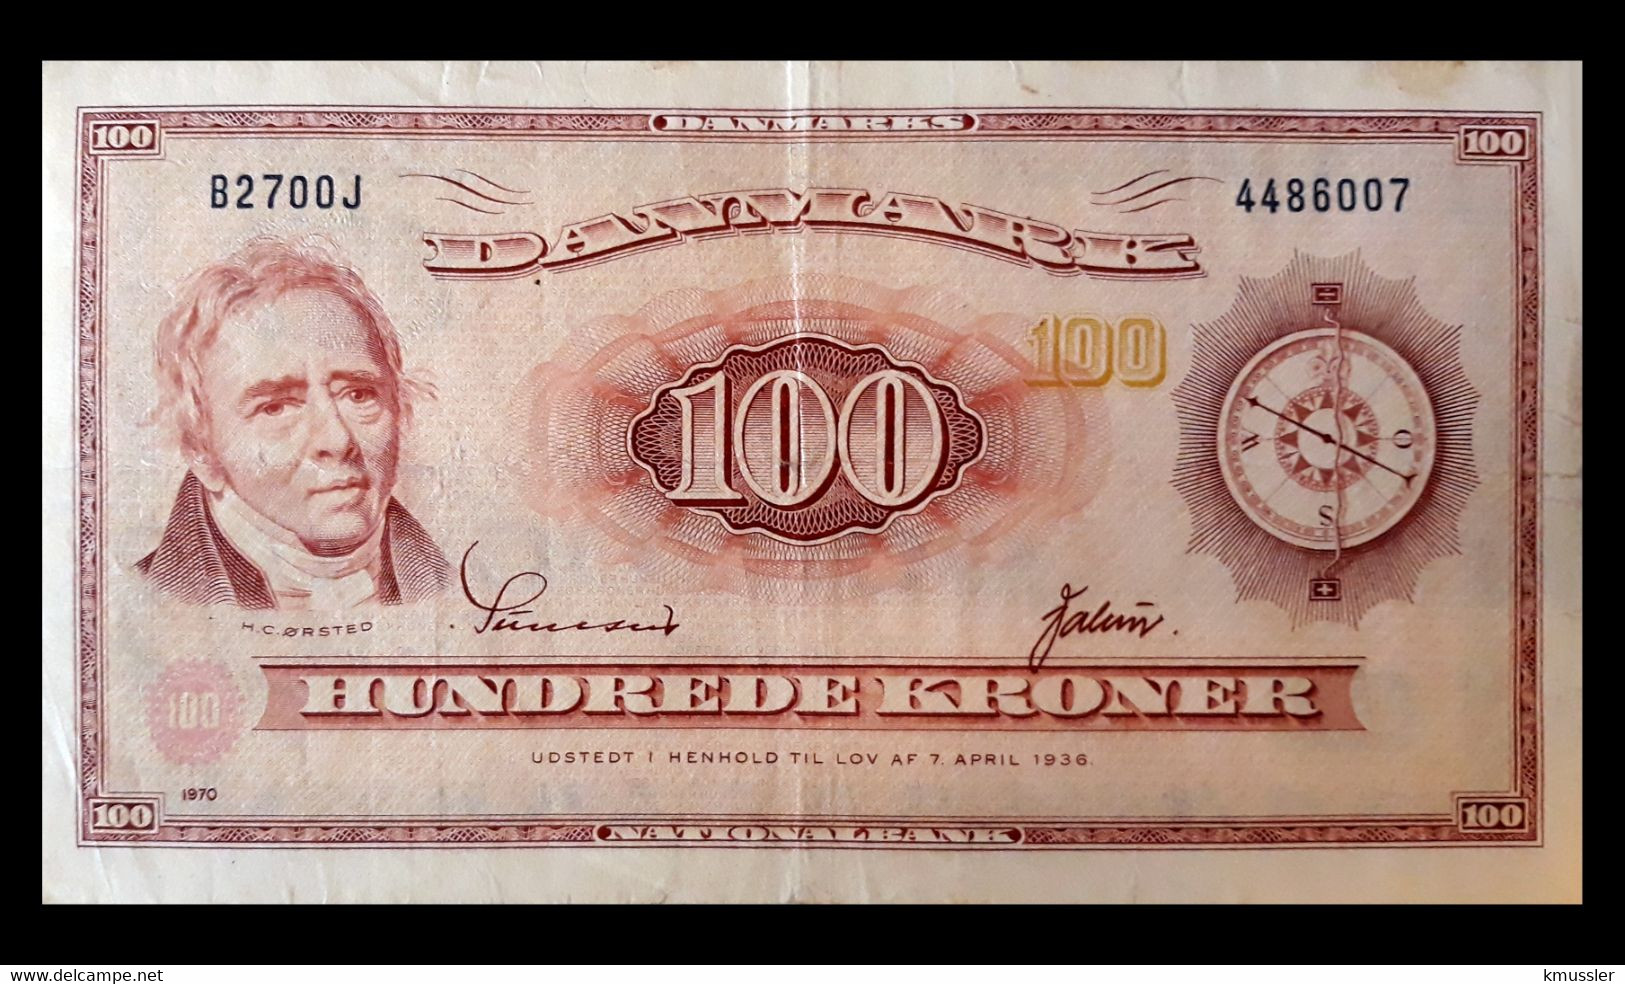 # # # Banknote Dänemark (Denmark) 100 Kroner 1936 # # # - Denmark